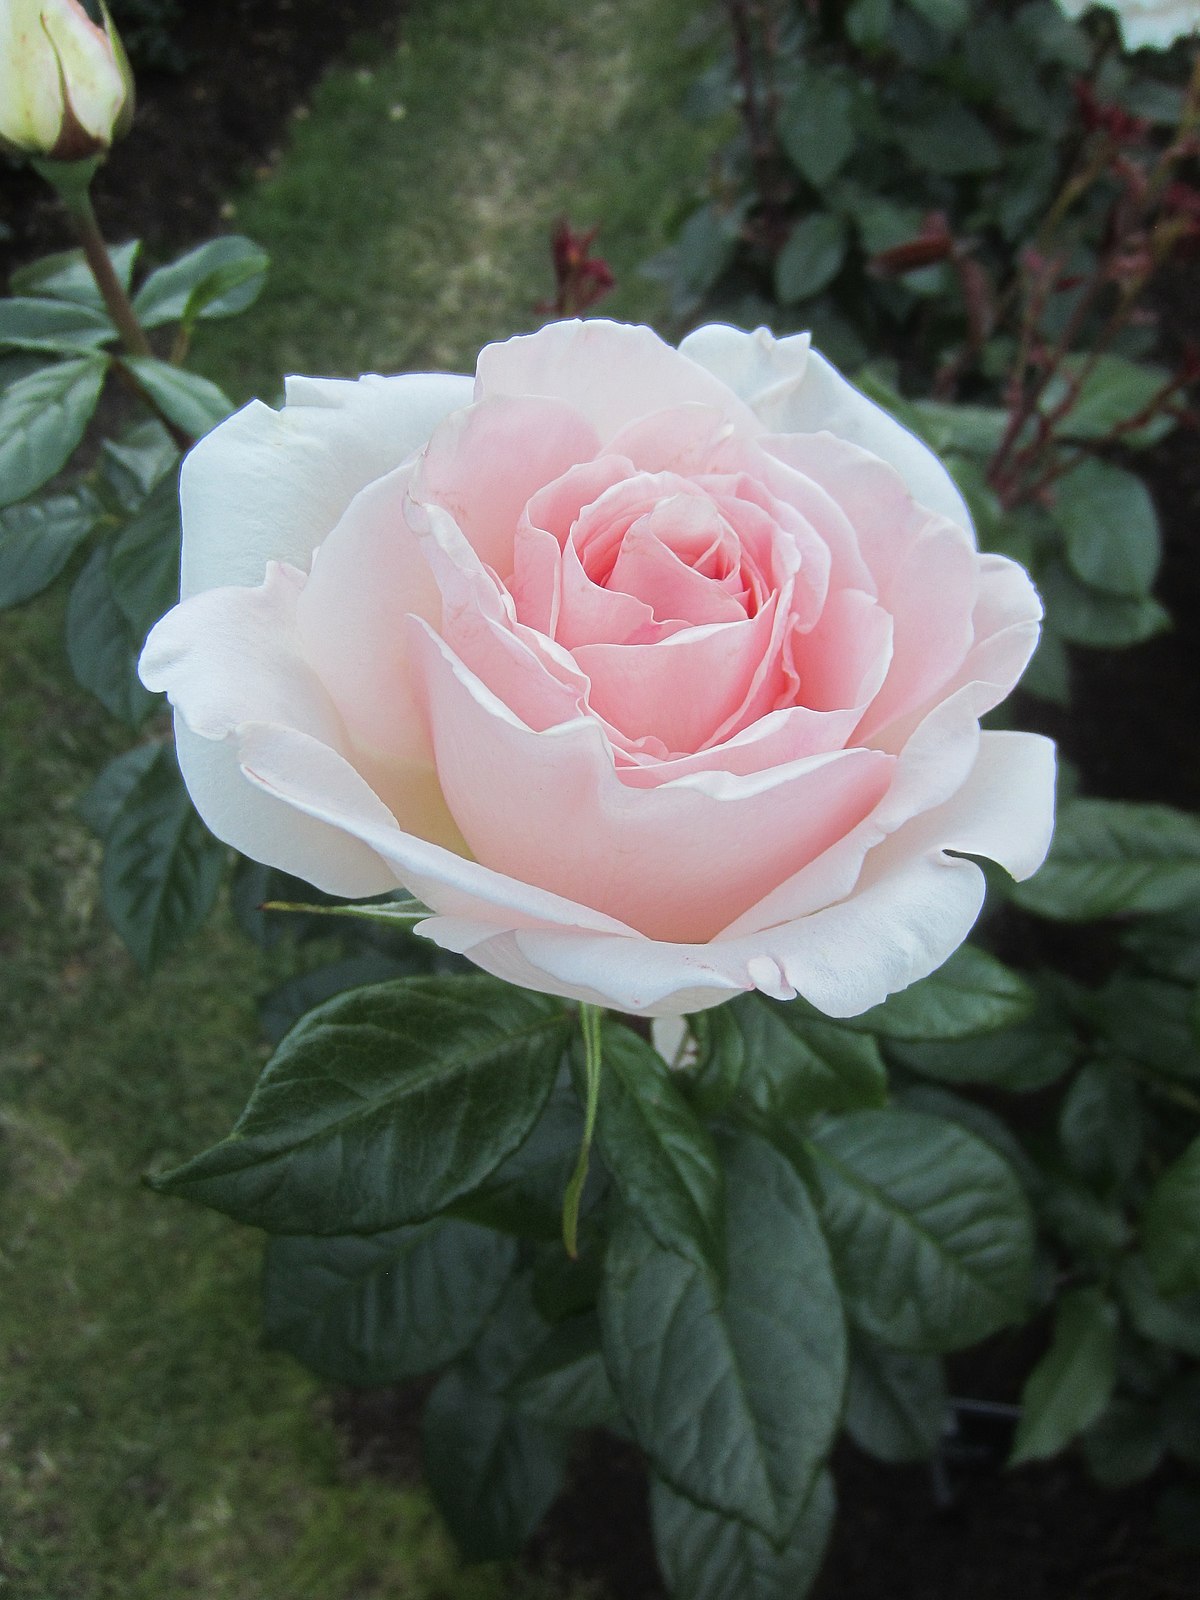 Hybrid tea rose - Wikipedia